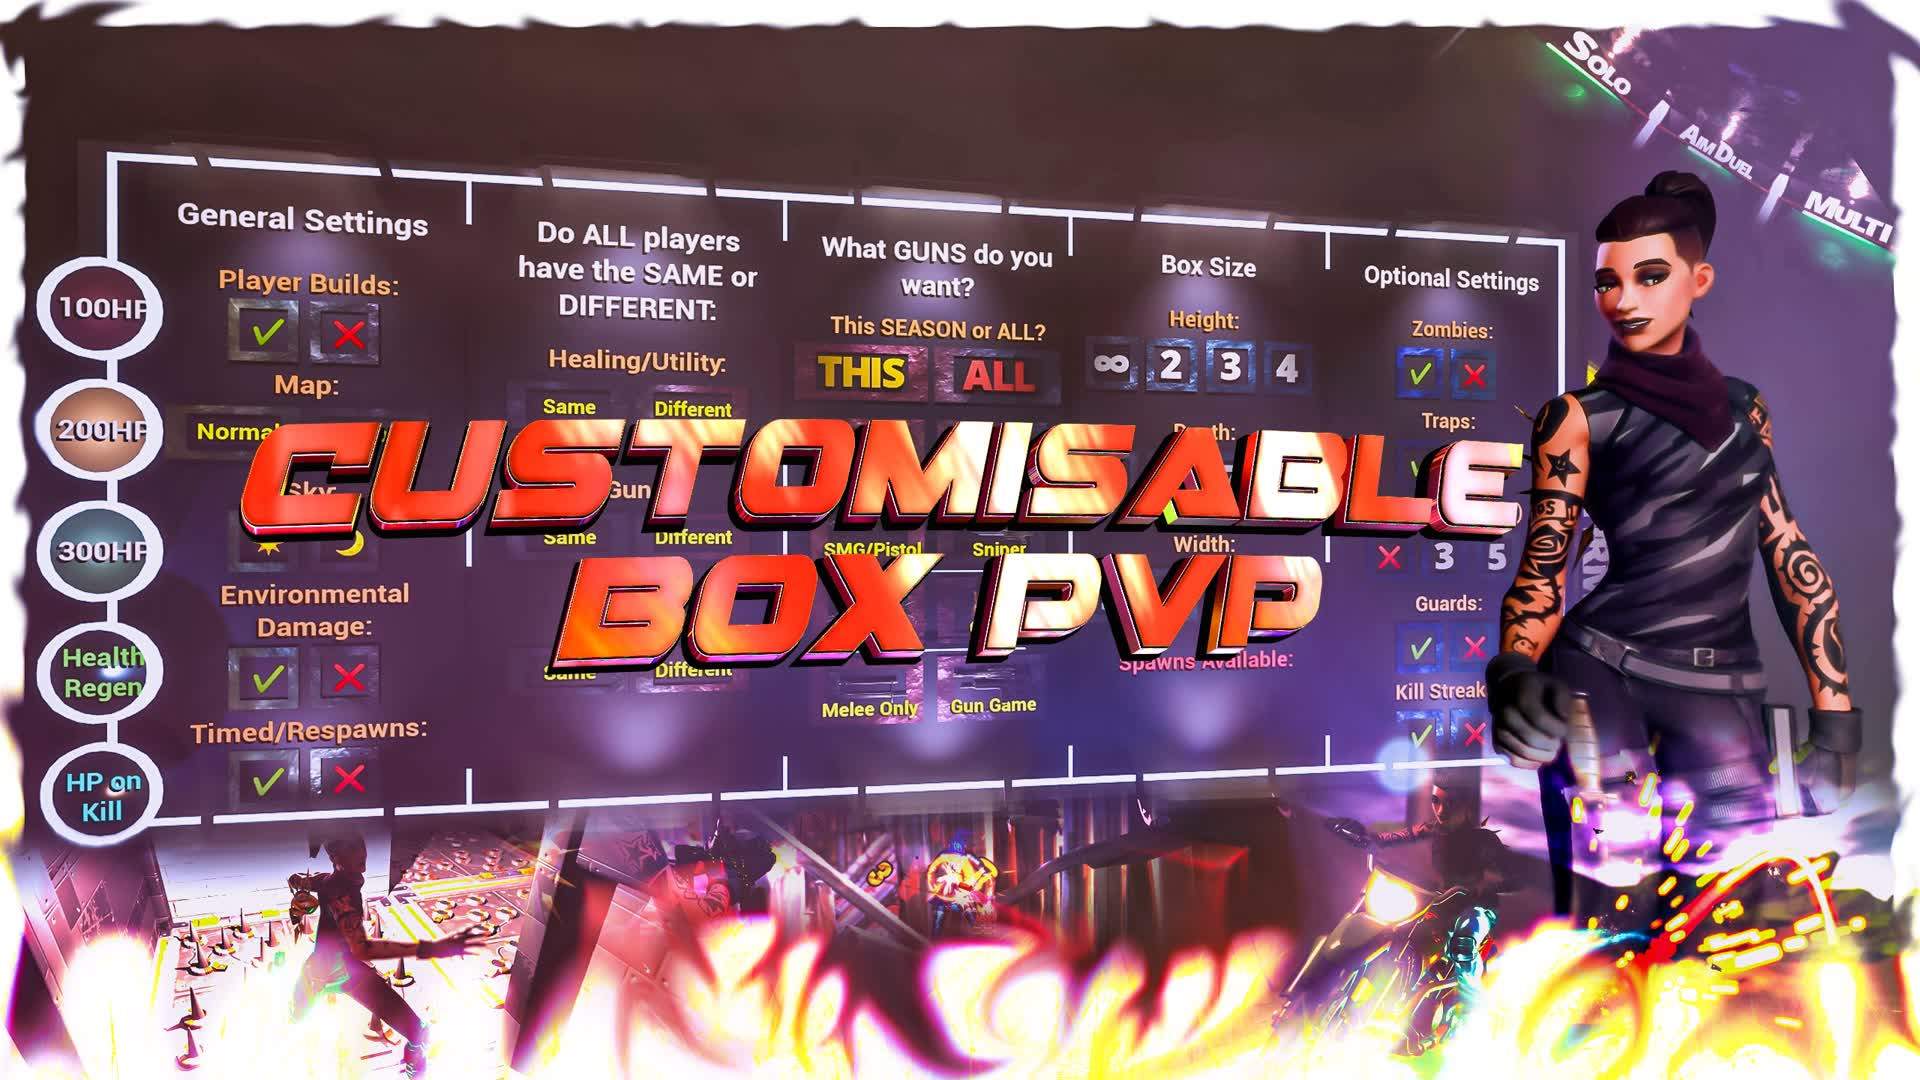 Customisable BOX PVP